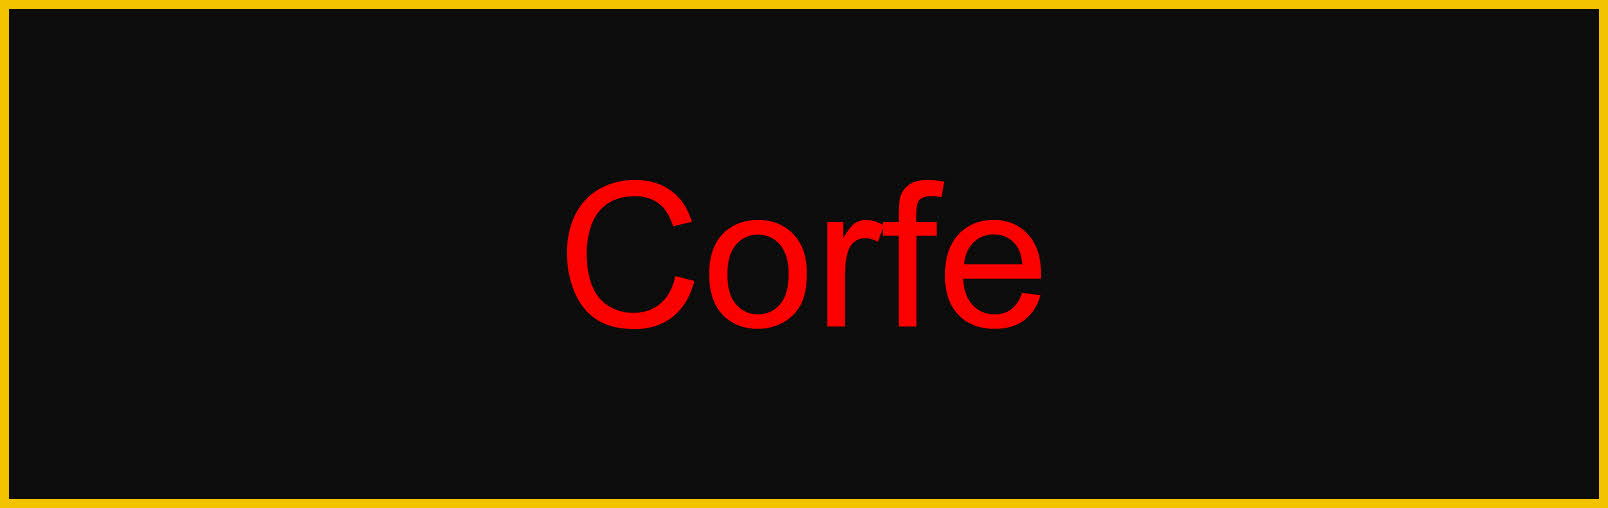 Corfe